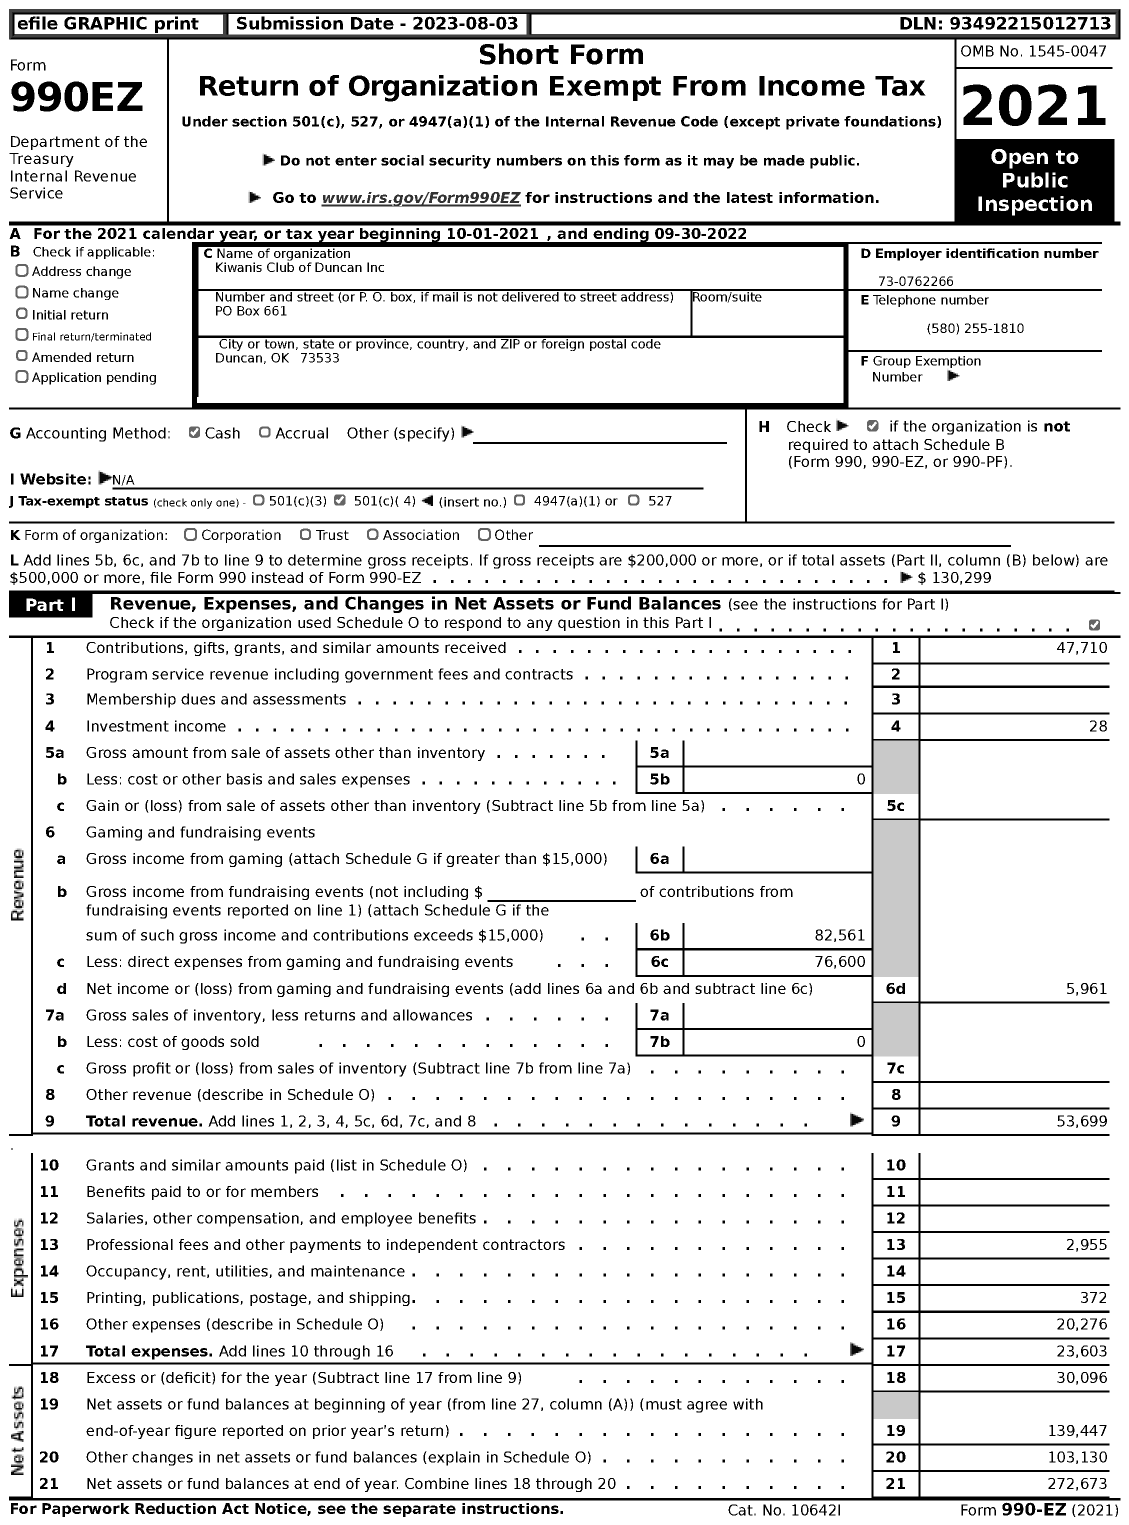 Image of first page of 2021 Form 990EZ for Kiwanis International - K00502 Duncan